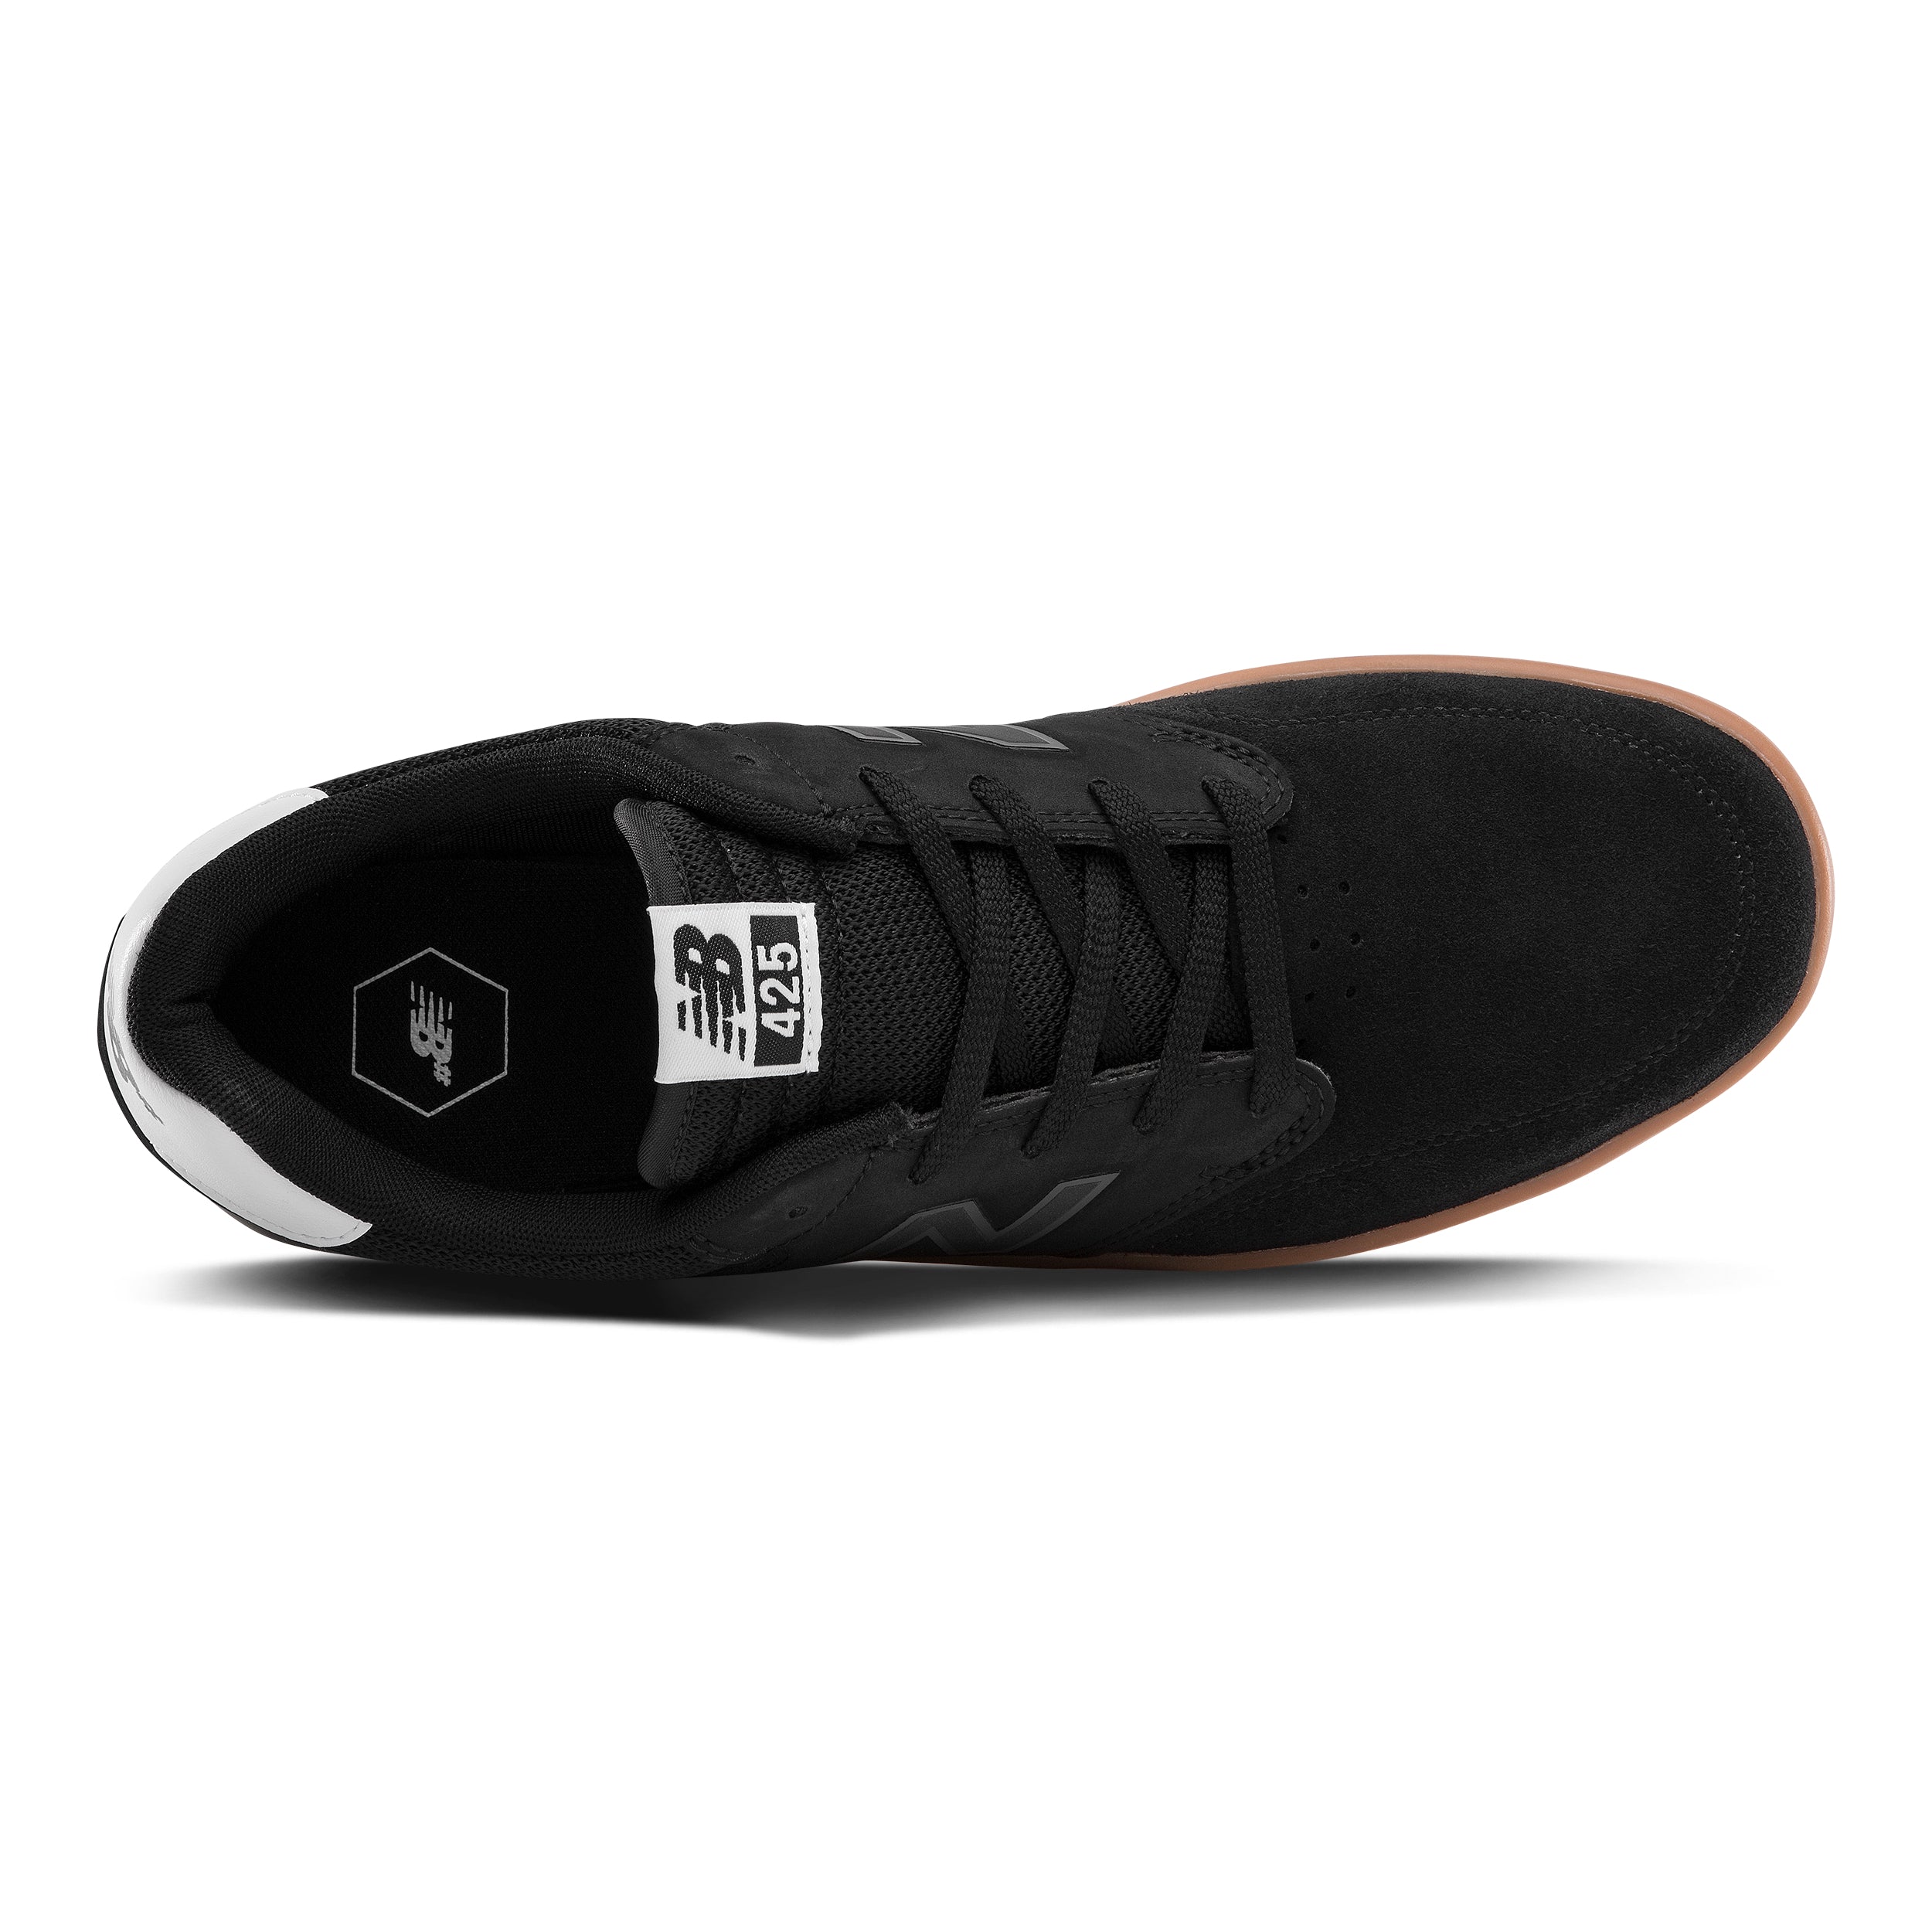 Black/Gum NM425 NB Numeric Skateboard Shoe Top